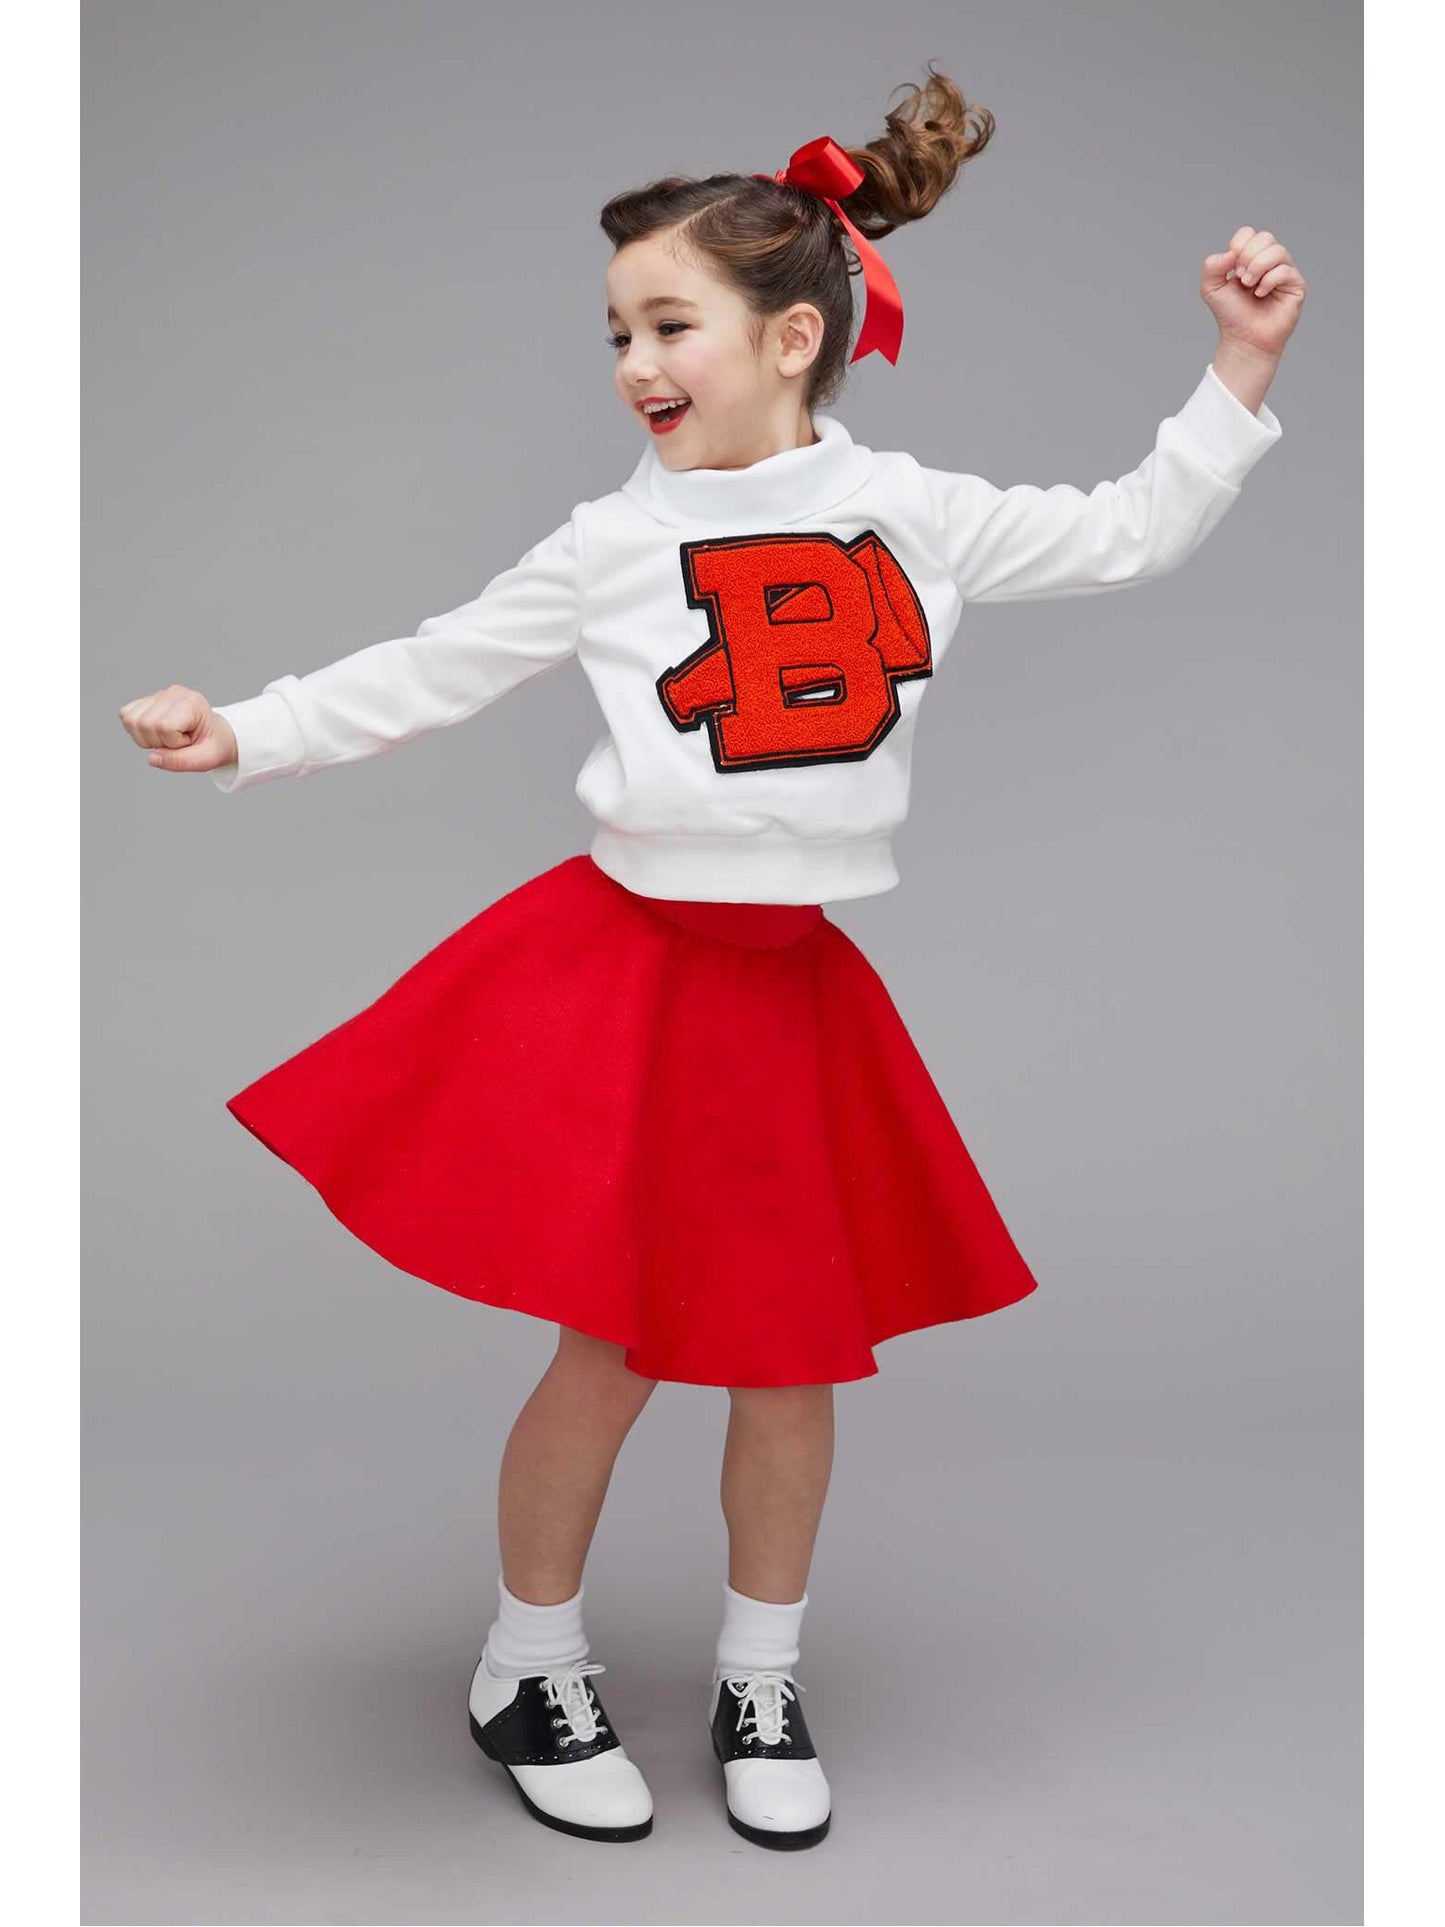 ‘50s Cheerleader Costume for Girls